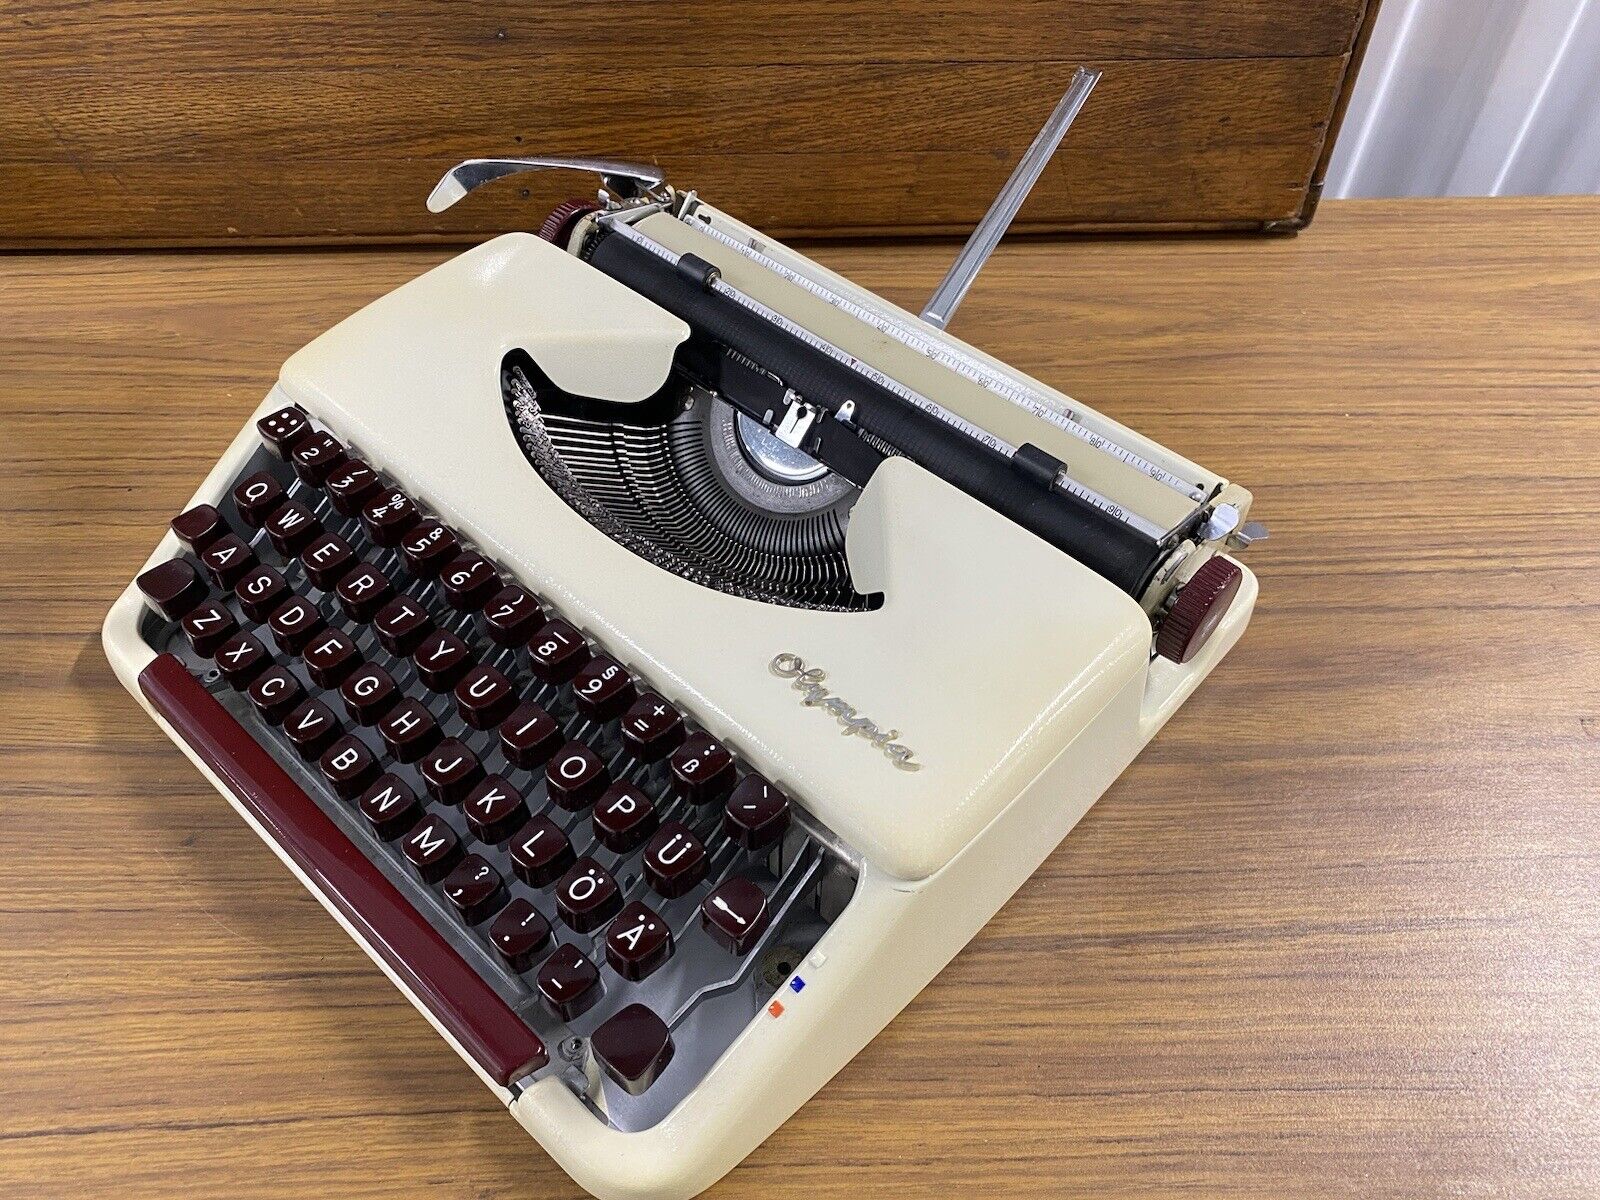 Olympia Splendid Typewriter With Snap-on Cover, Burgundy Keys